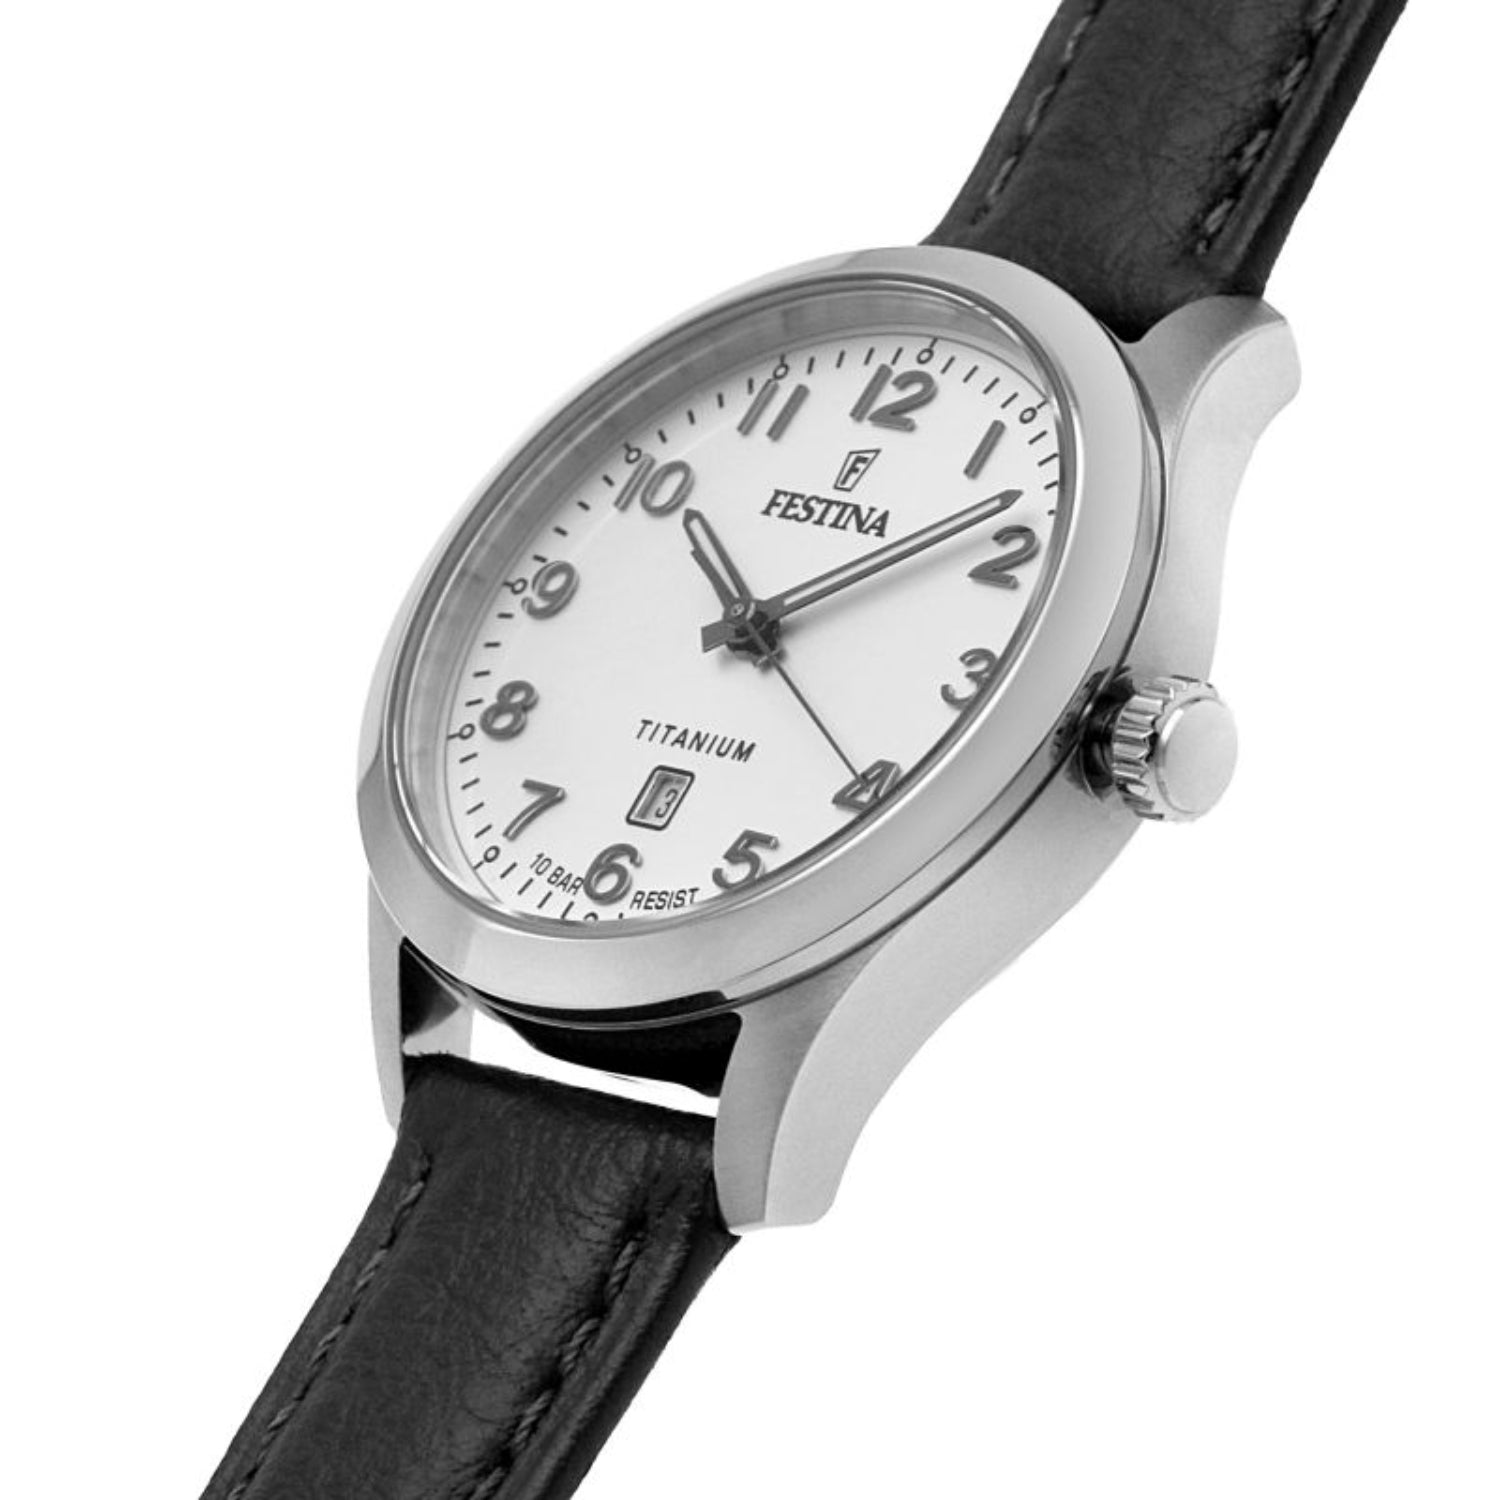 Festina women's white dial quartz watch - f20469/1